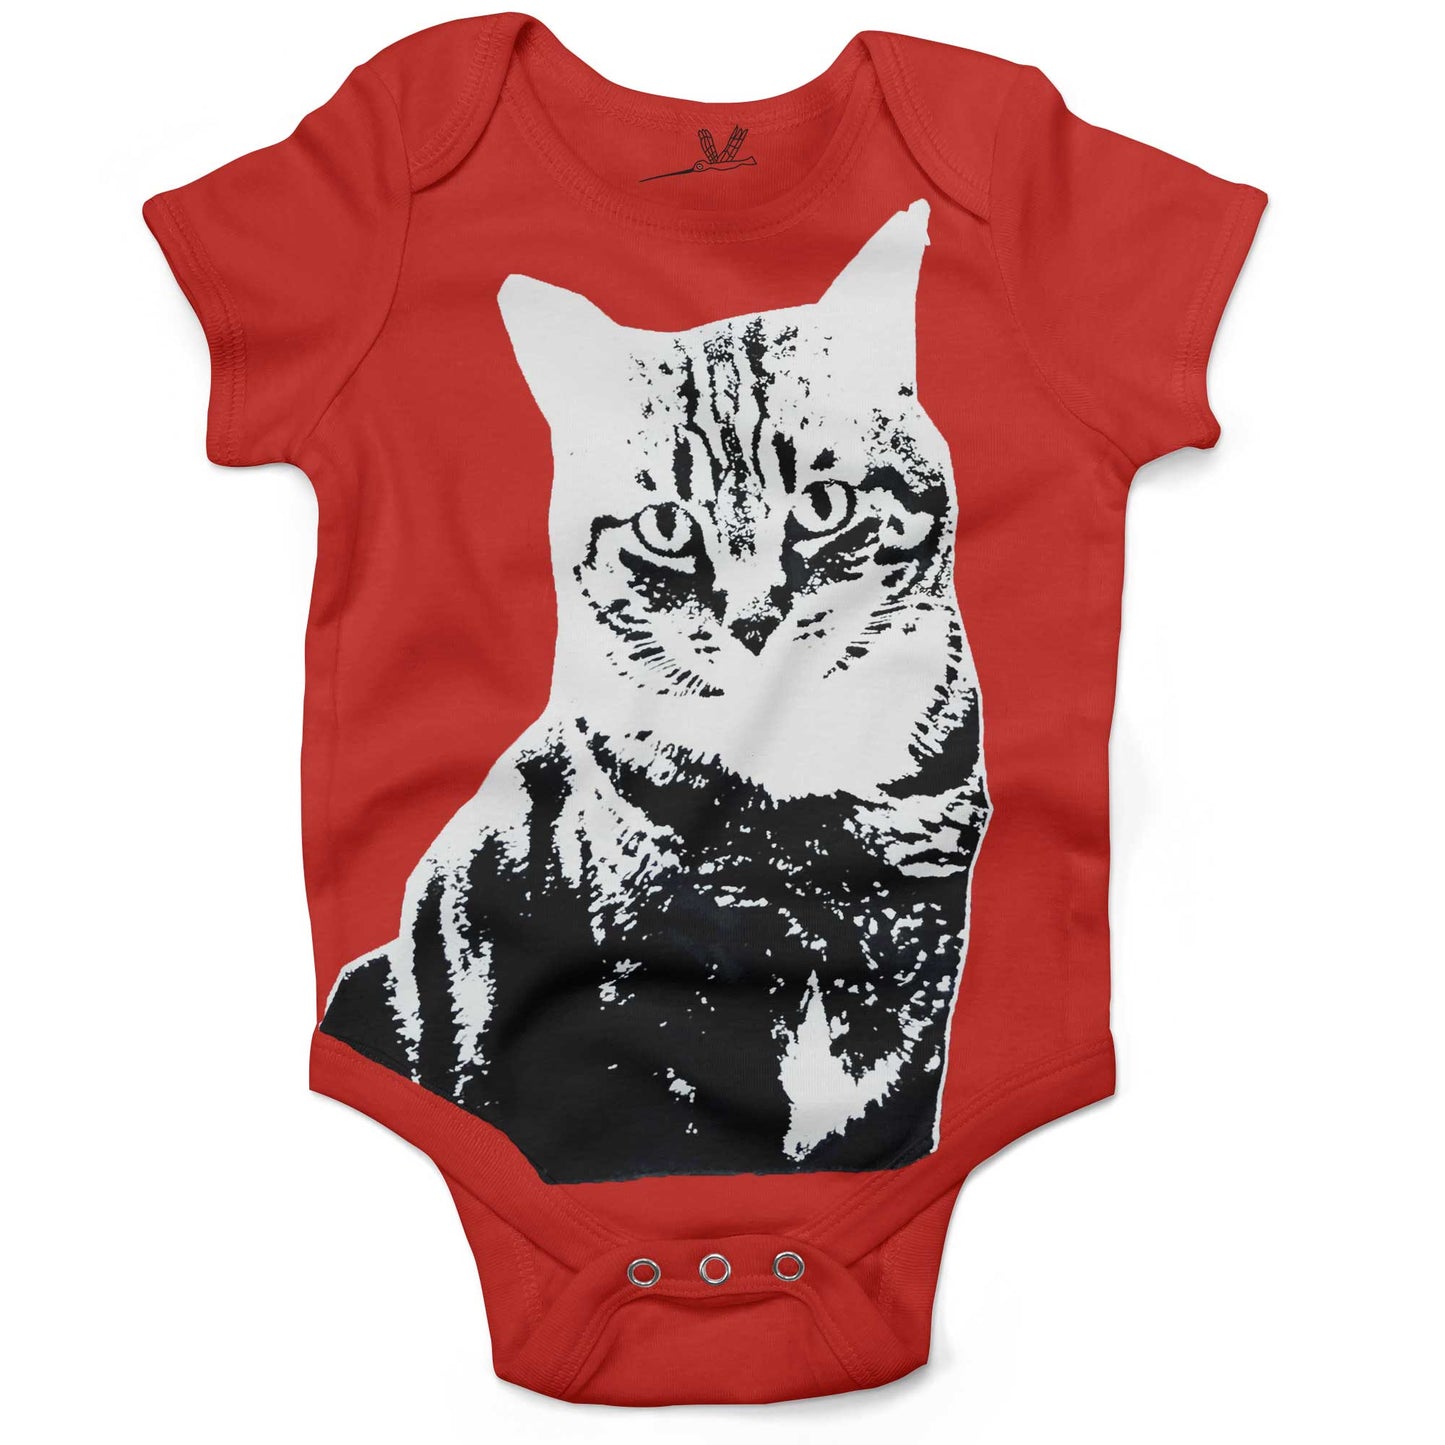 Black & White Cat Infant Bodysuit or Raglan Baby Tee-Organic Red-3-6 months